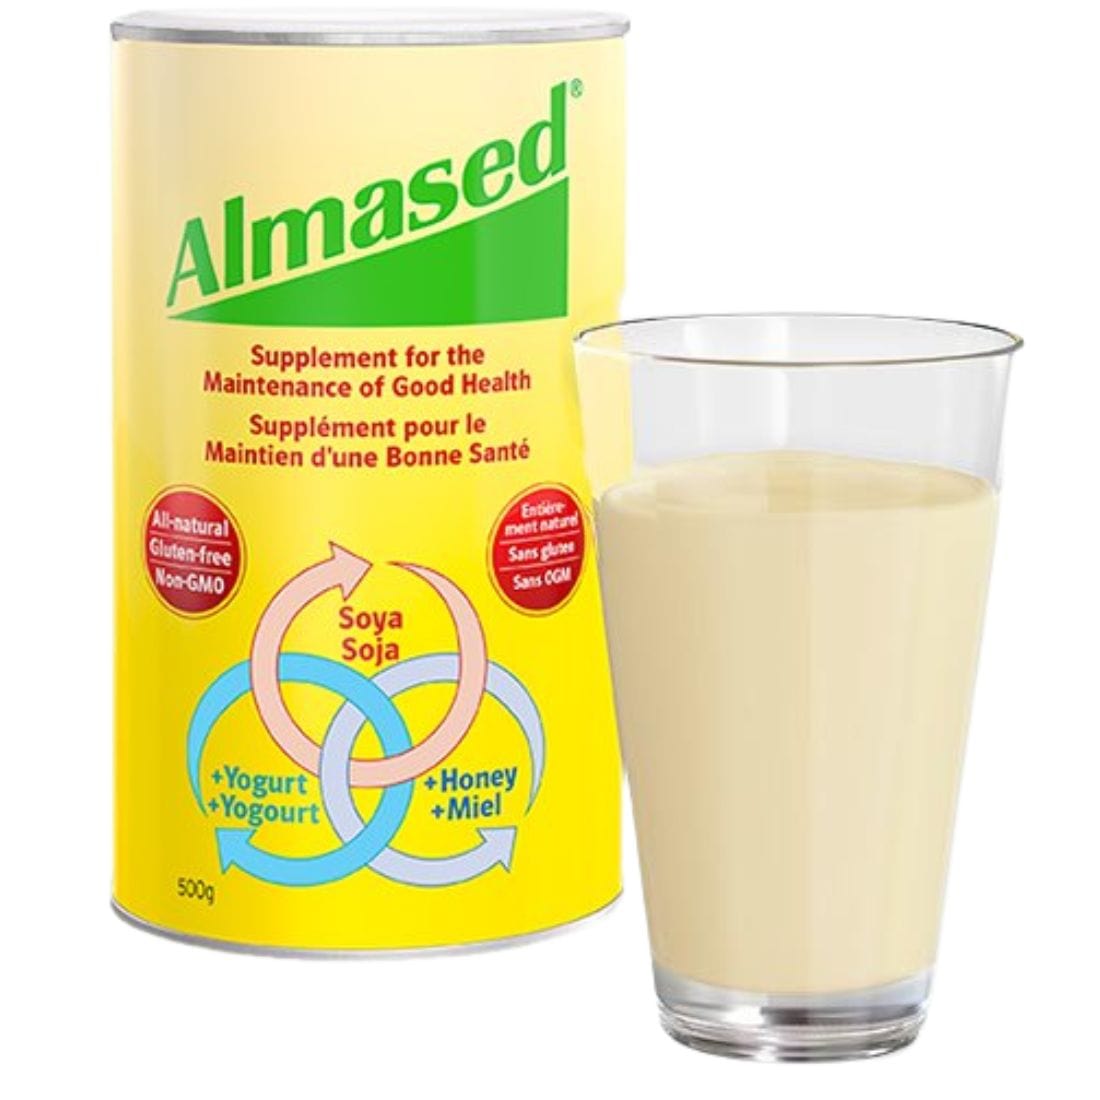 Almased Powder, 100% All Natural, 500g